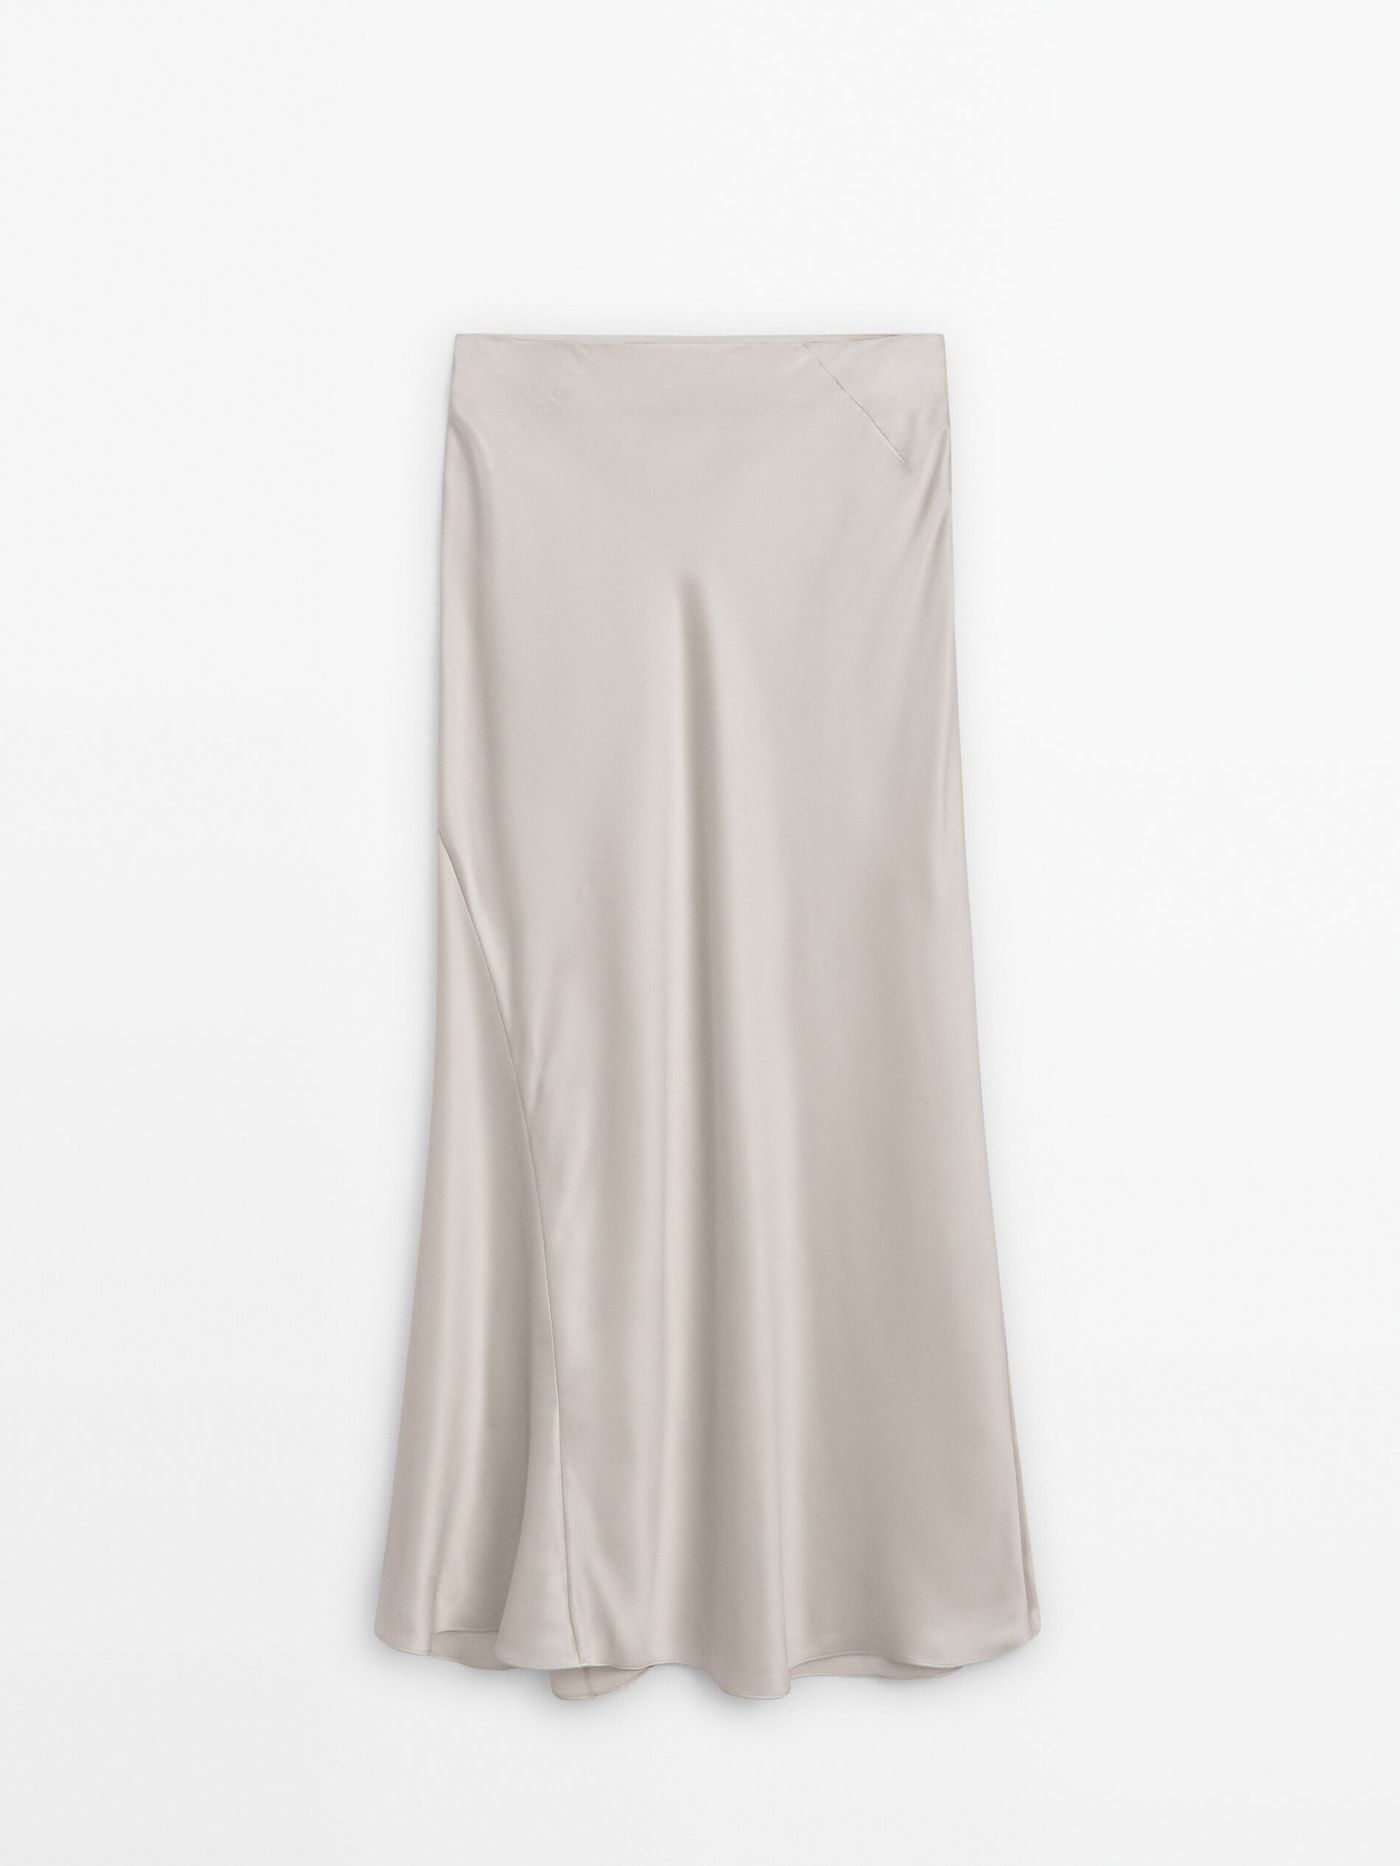 Long satin-finish silk skirt - Studio | Massimo Dutti UK